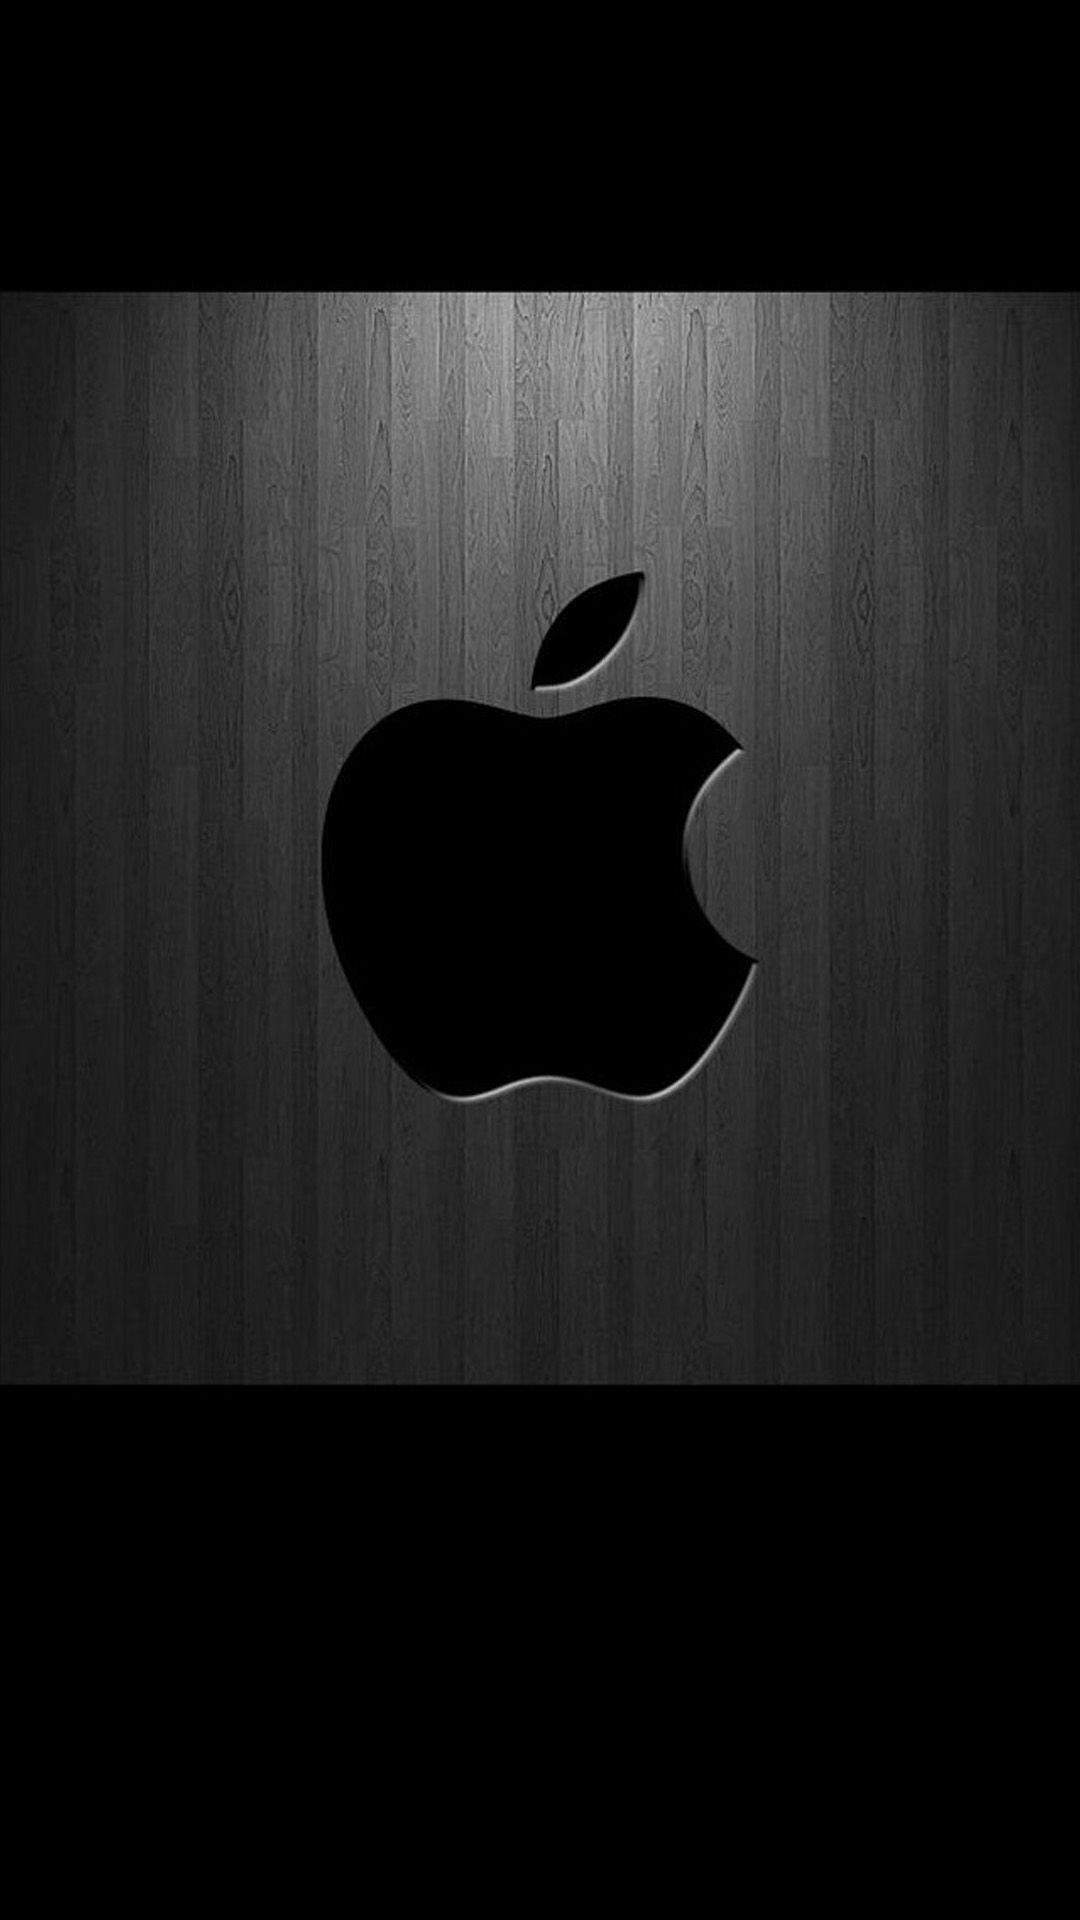 Apple Logo Iphone Hd Wallpapers Top Free Apple Logo Iphone Hd Backgrounds Wallpaperaccess